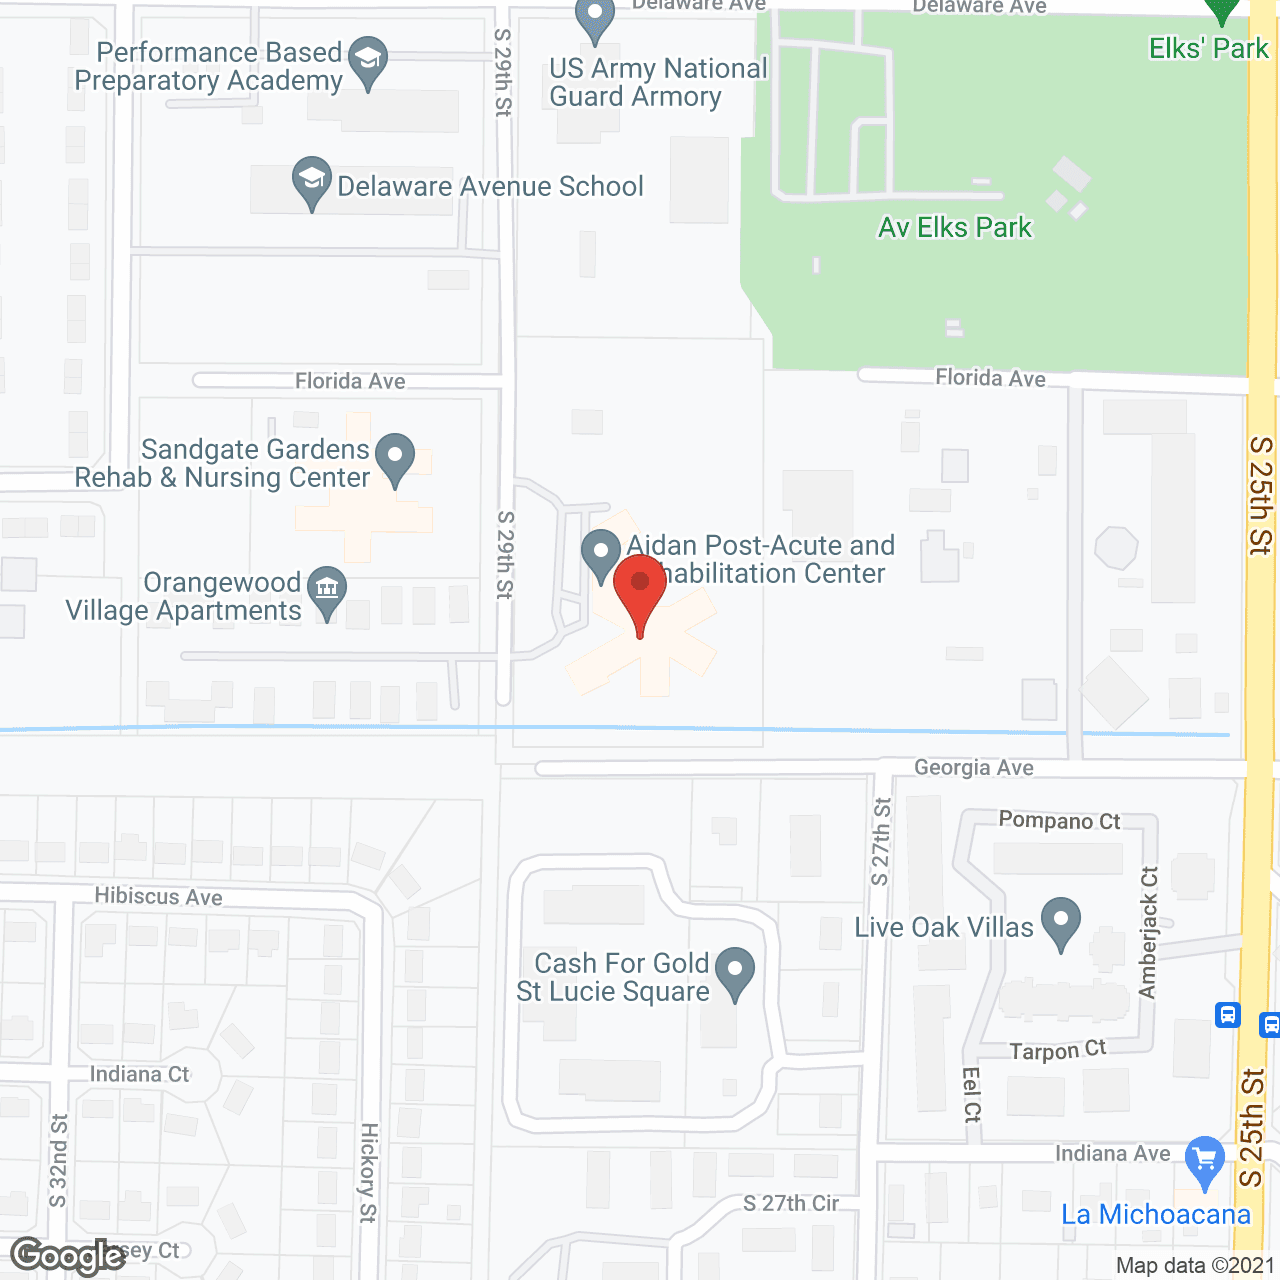 Aidan Post-Acute and Rehabilitation Center in google map